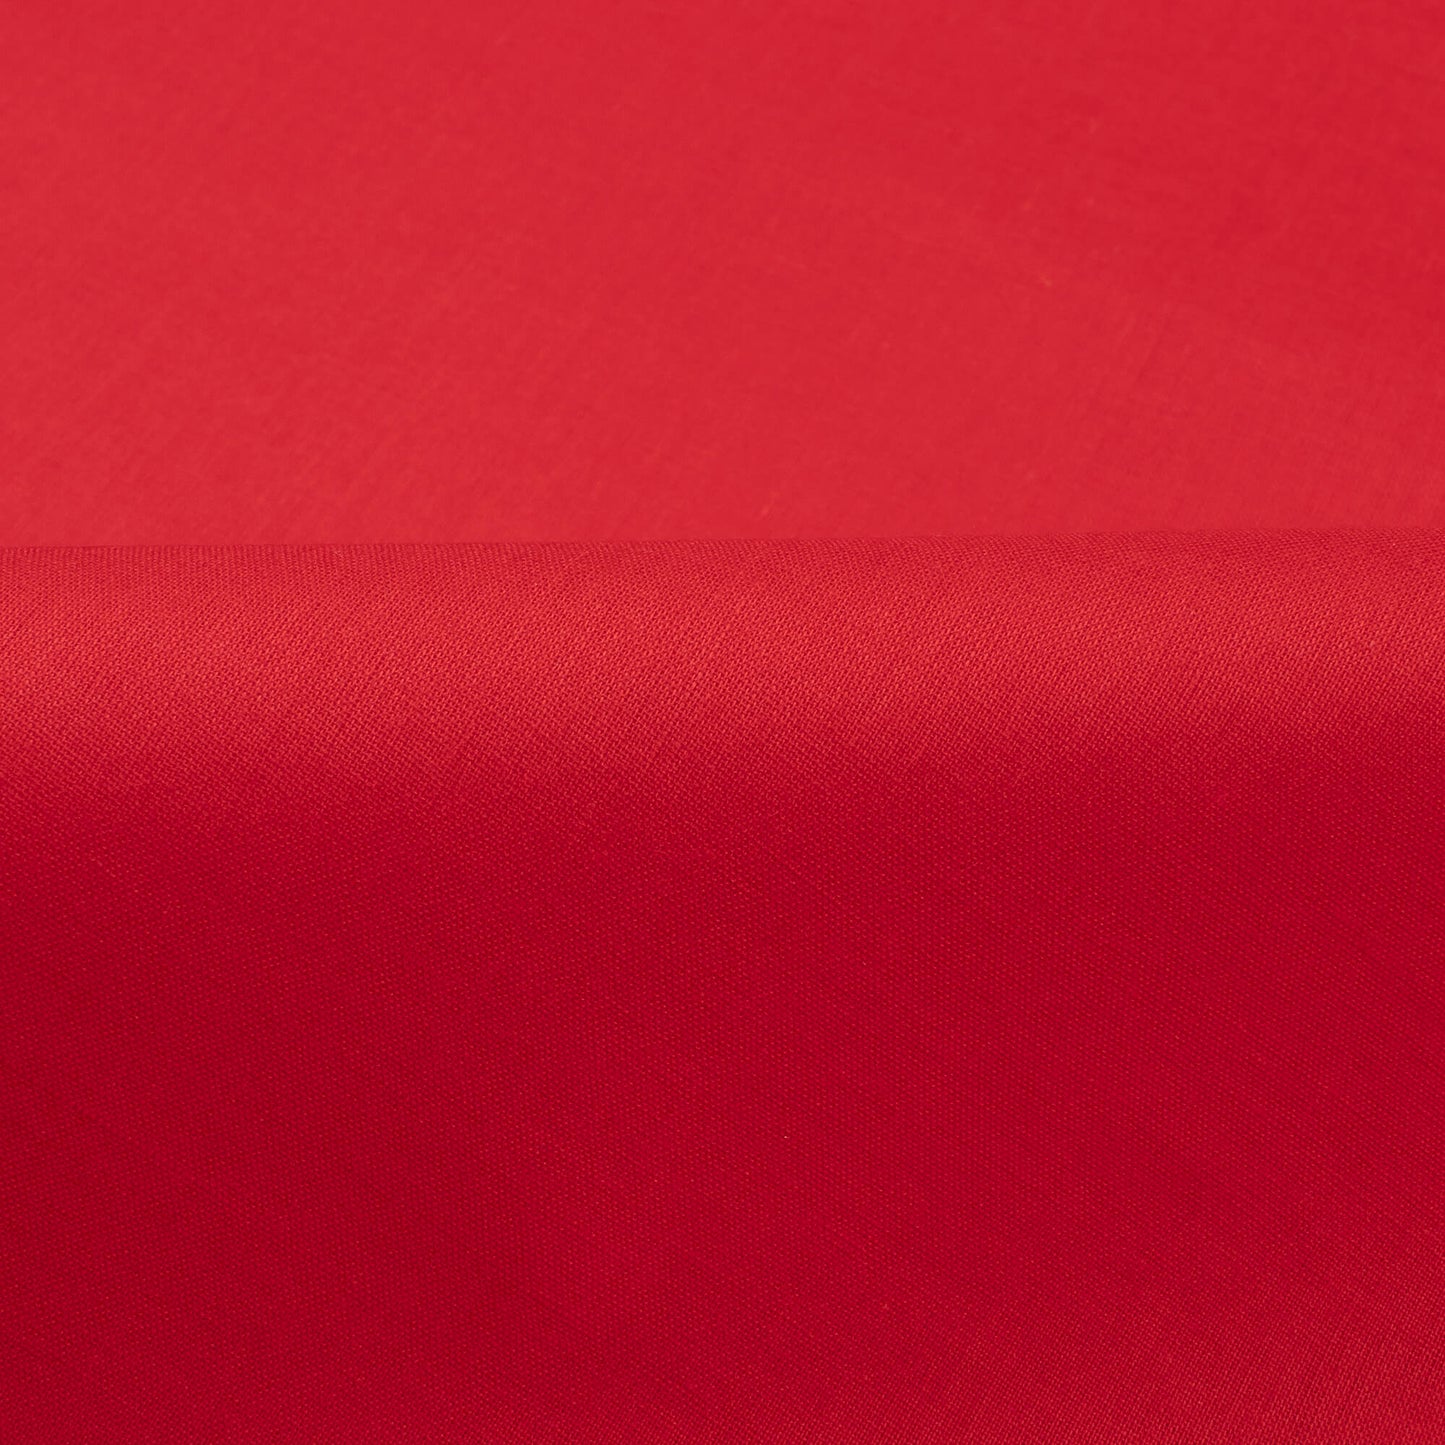 Carmine Red Plain Cotton Cambric Fabric